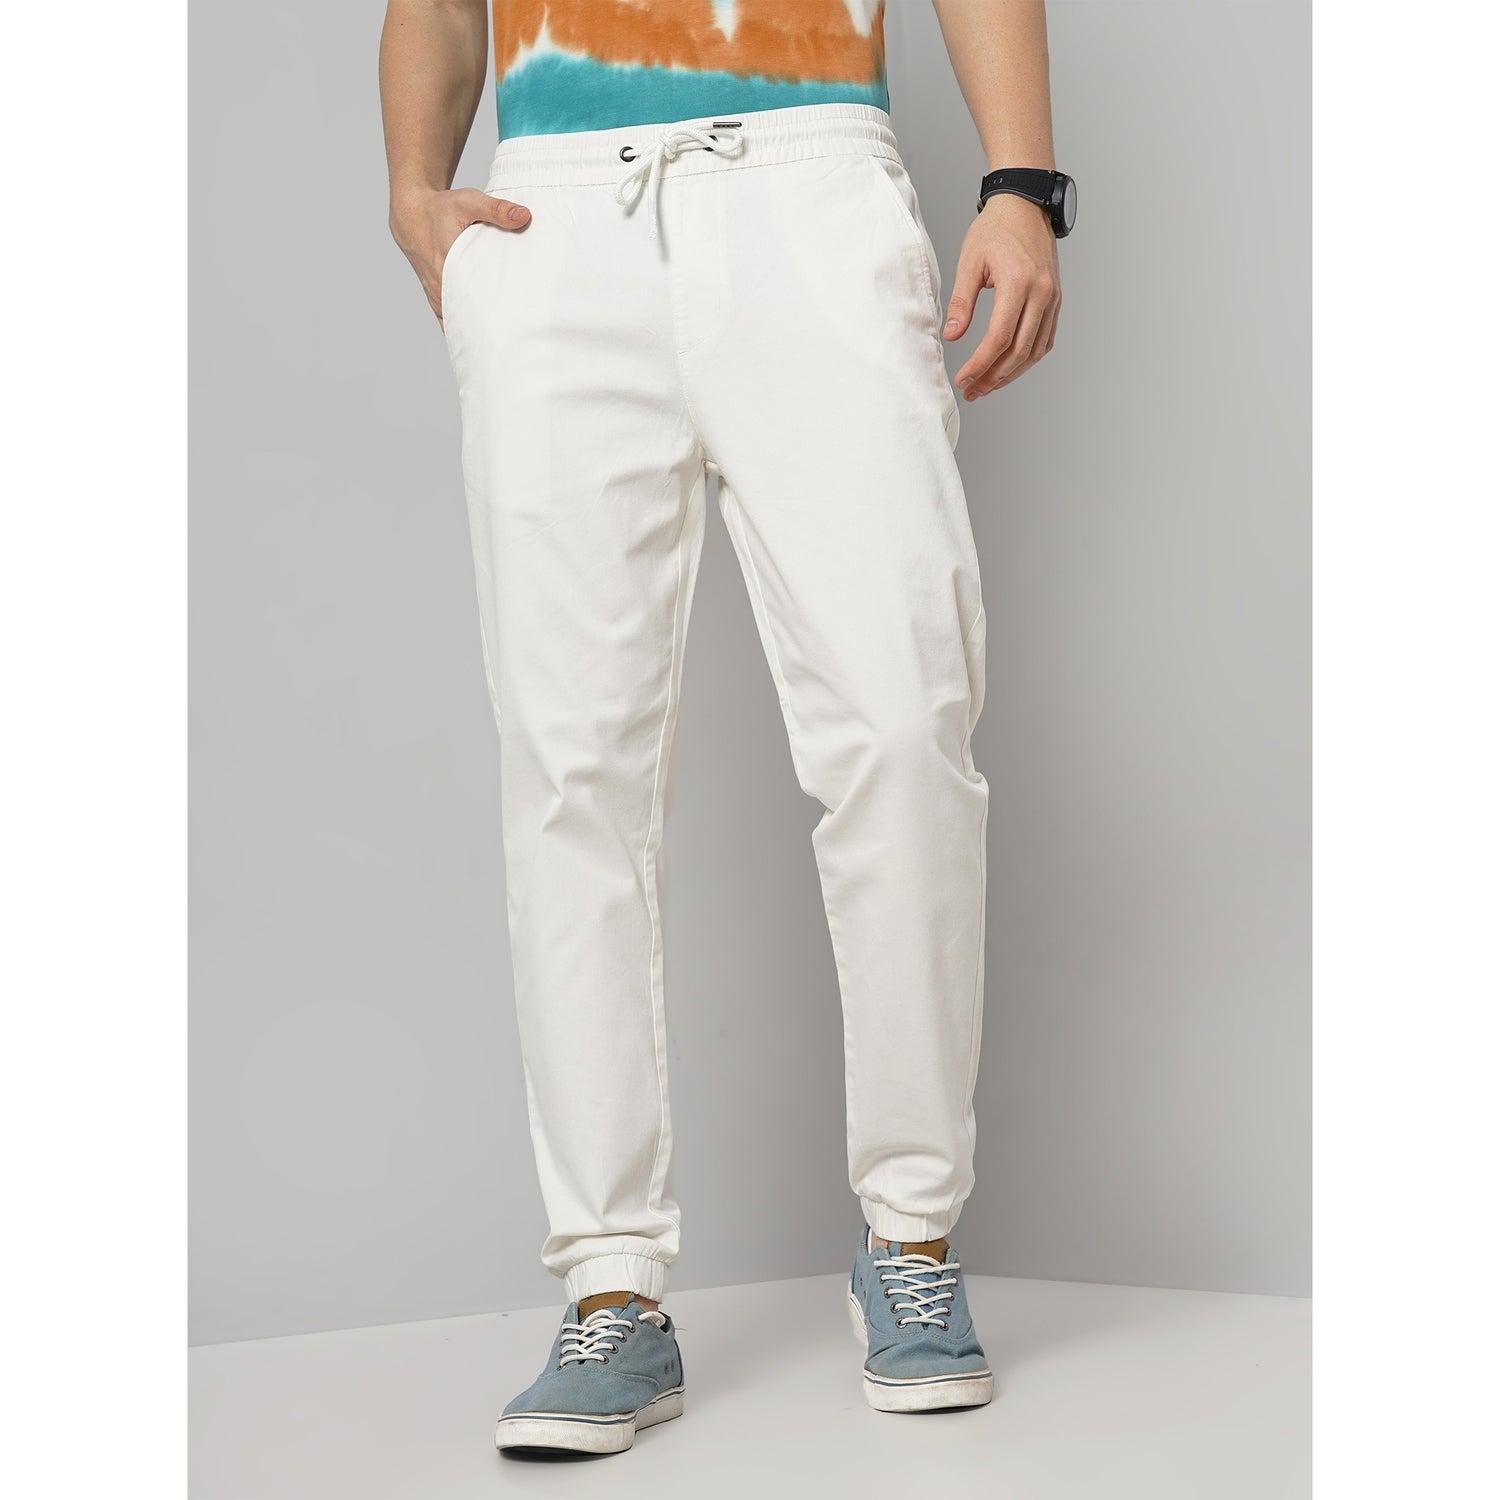 Men's Beige Solid Regular Fit Cotton Joggers Trousers (FOPLANE1)